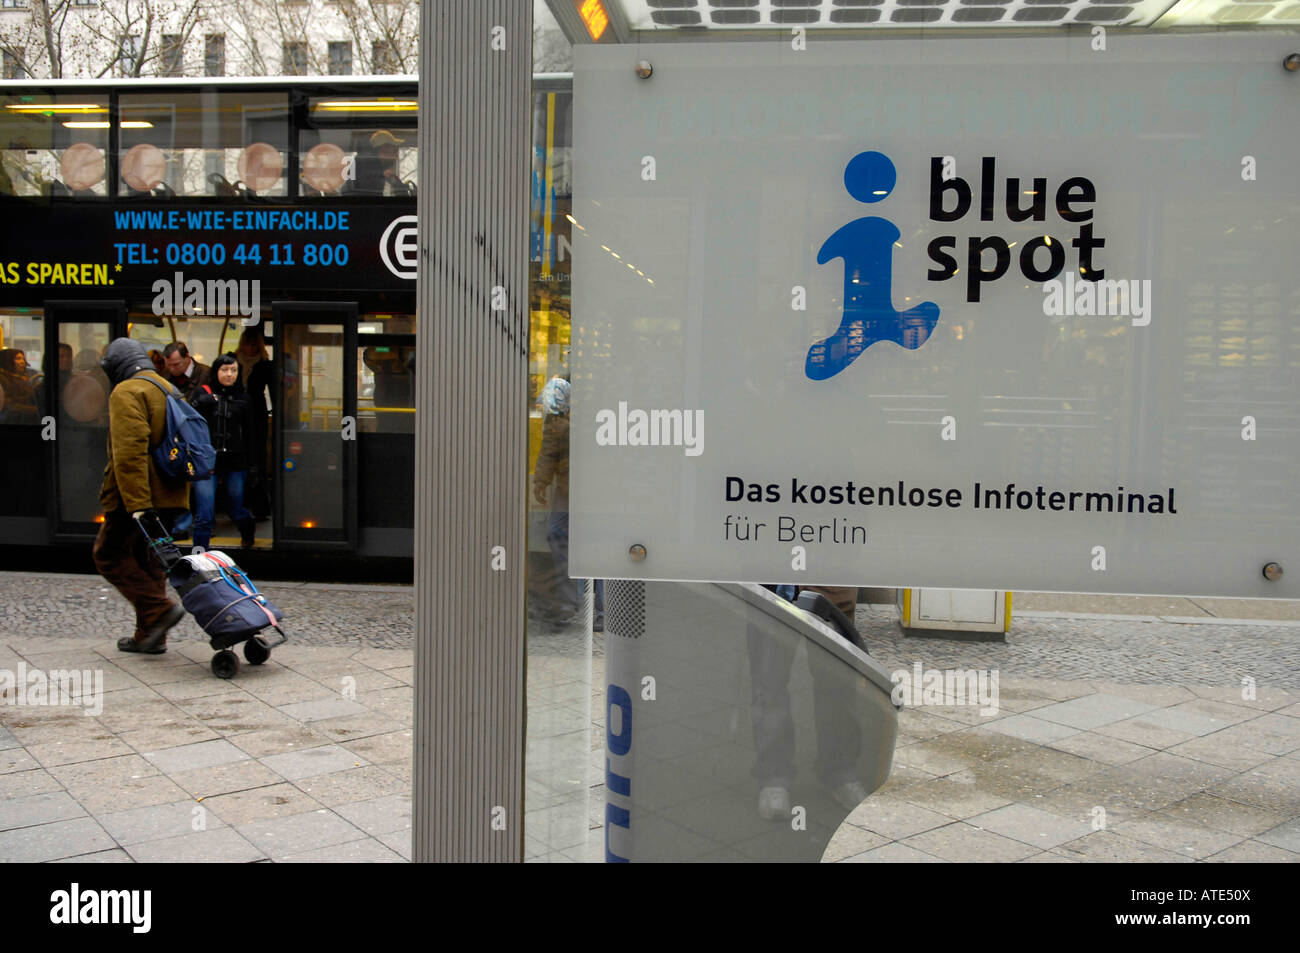 blue spot das kostenlose infoterminal fur berlin city bus stop germany deutschland information travel tourism technology Stock Photo